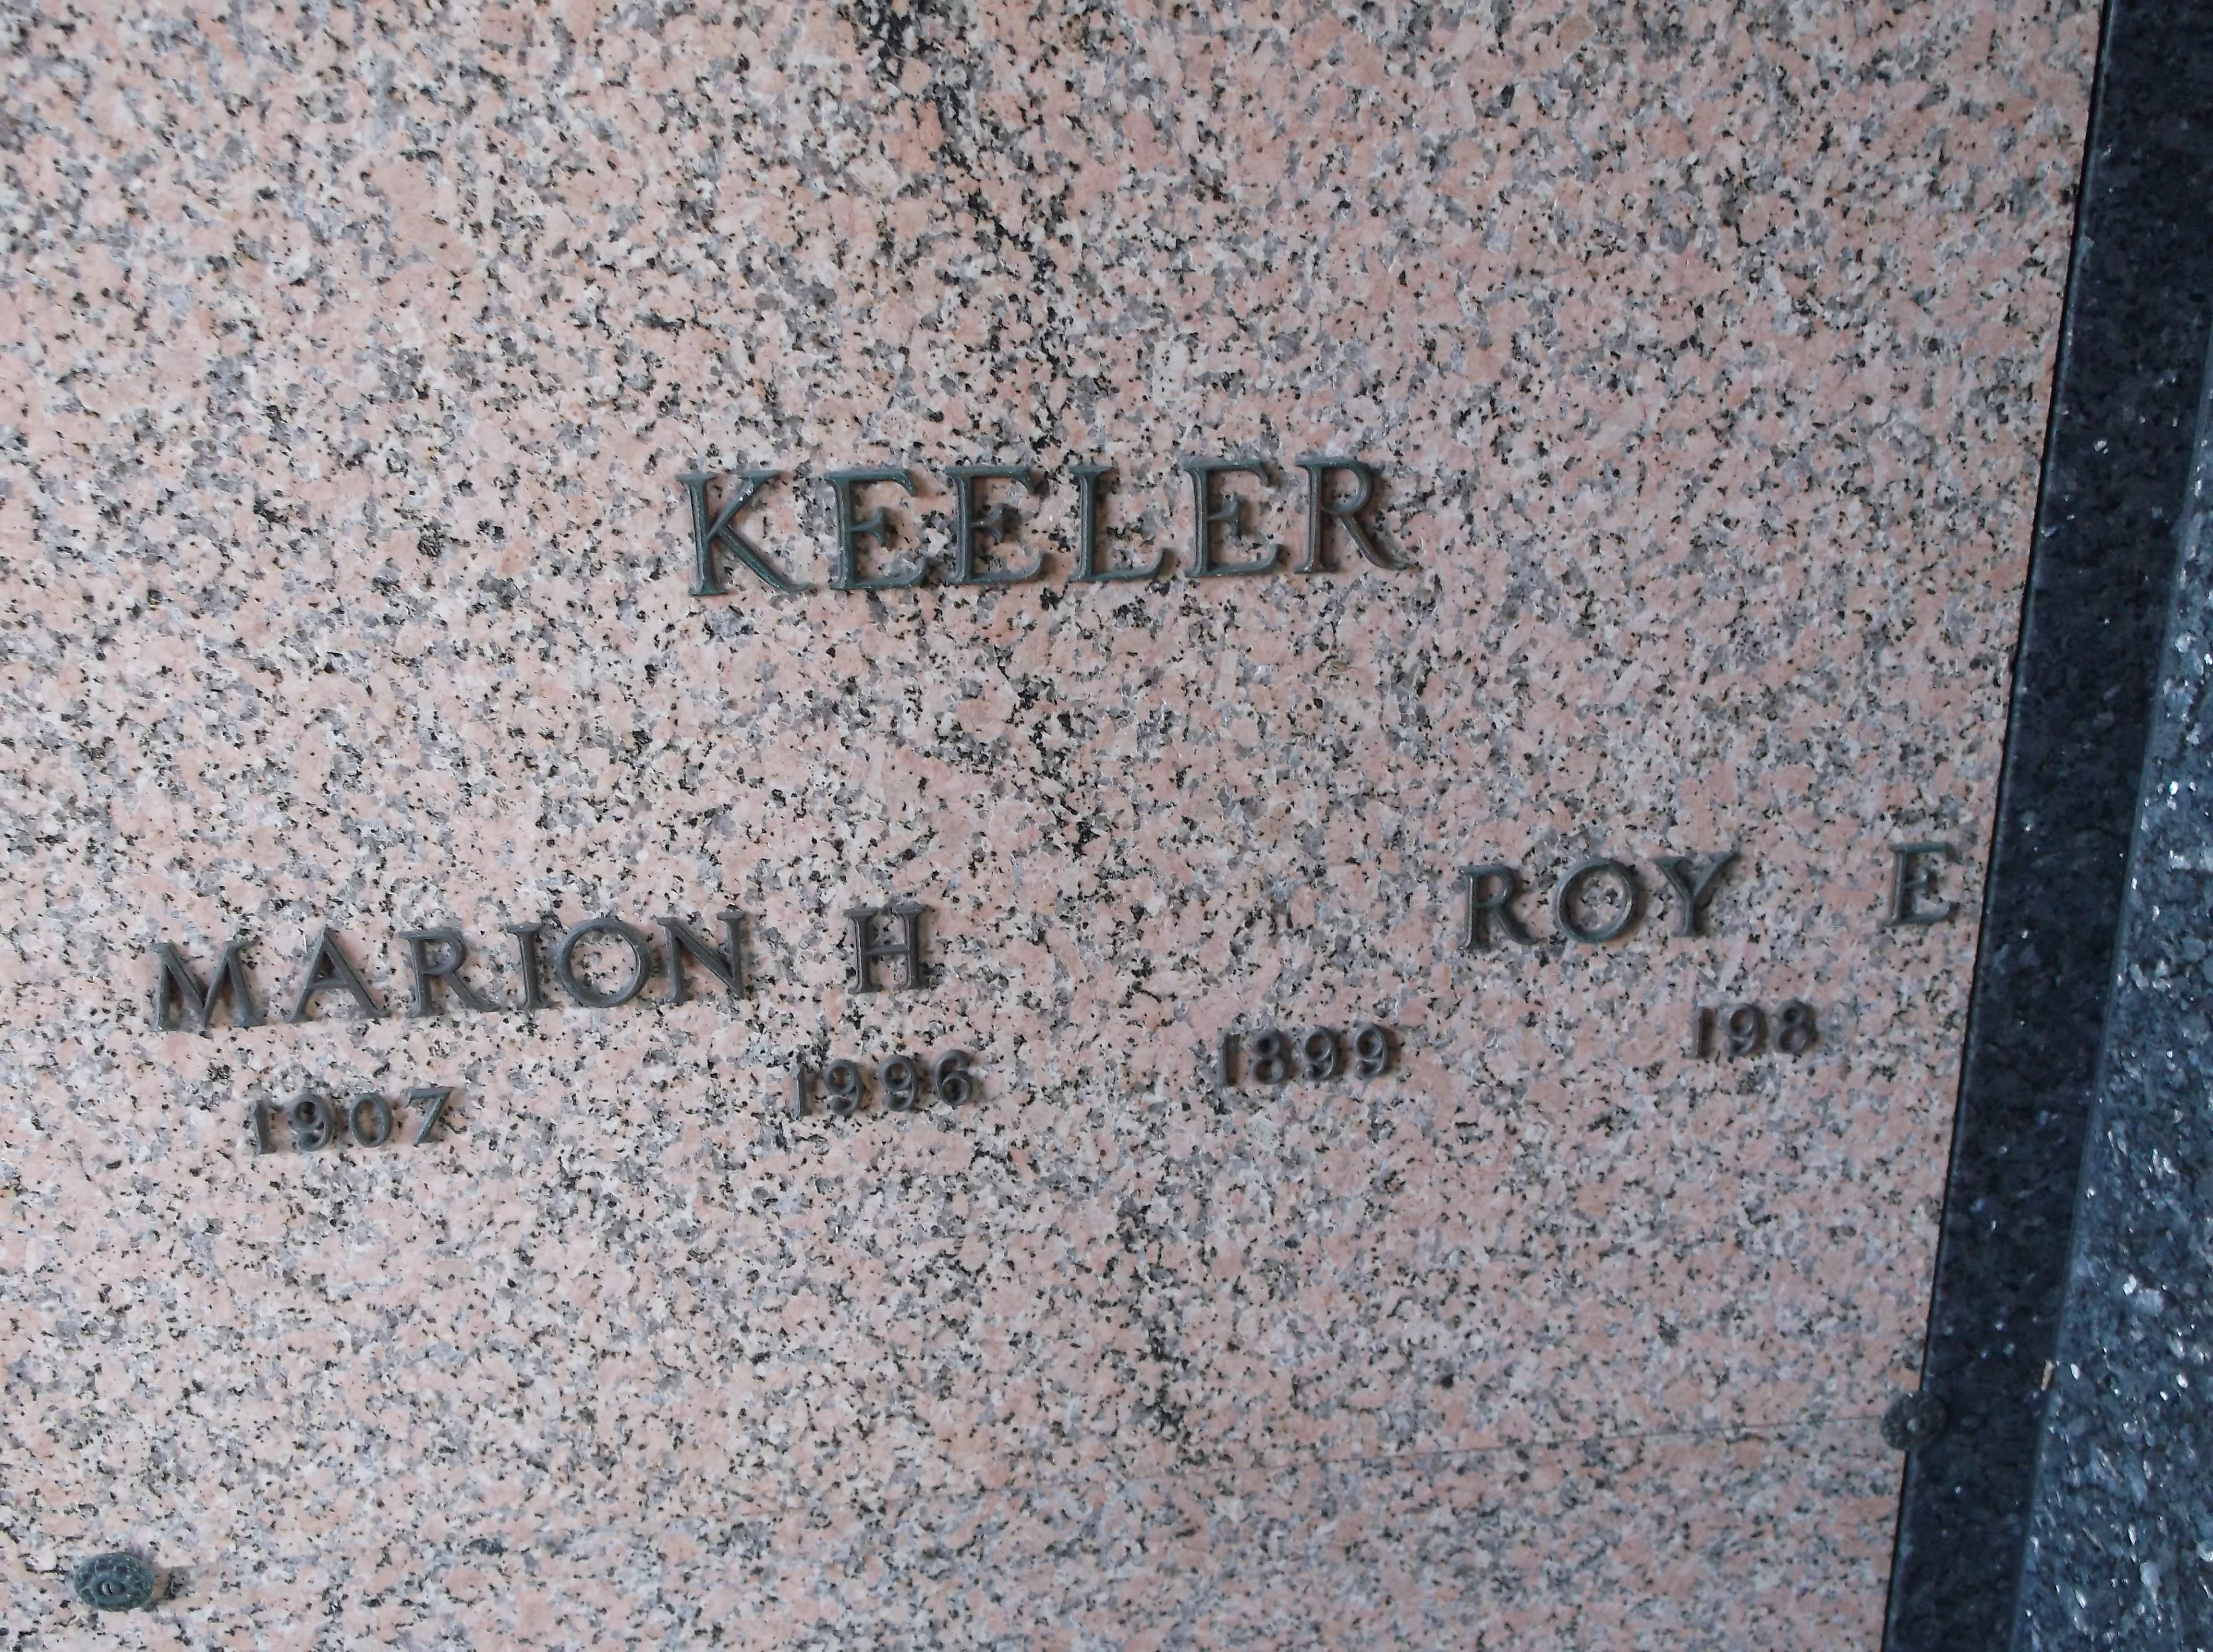 Roy E Keeler